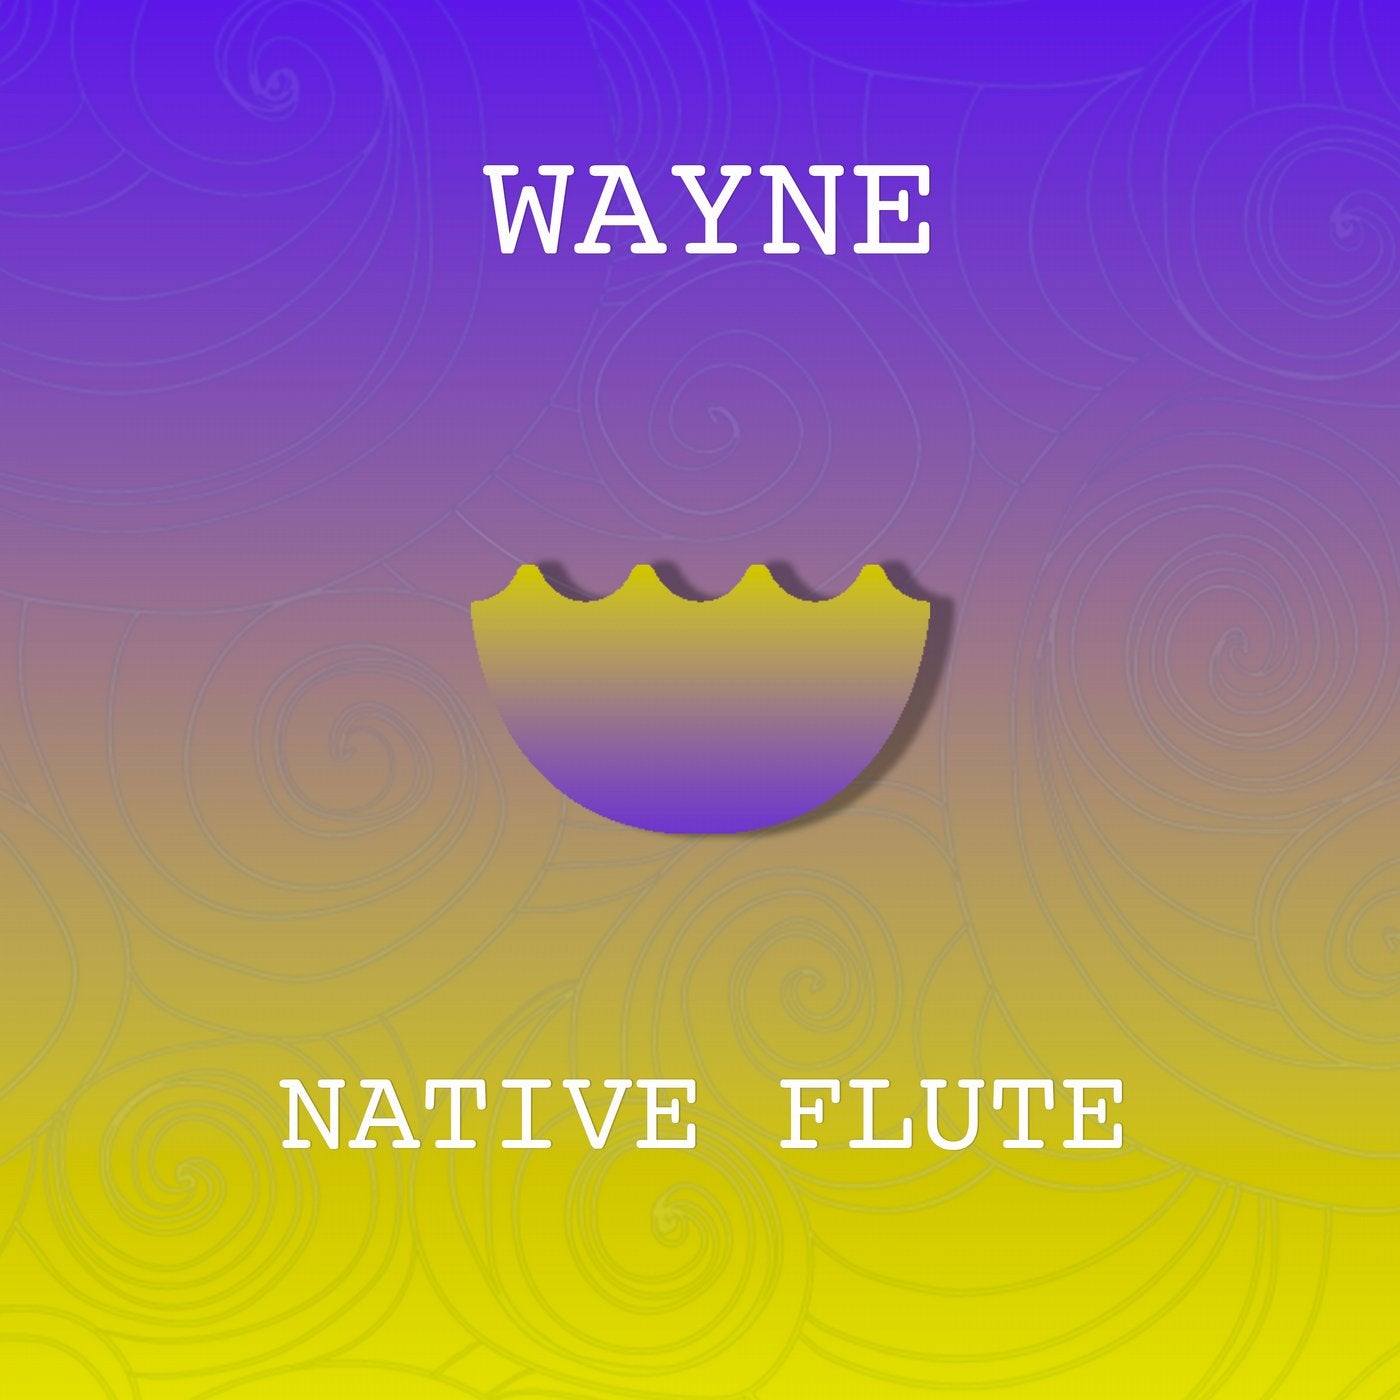 Native Flute